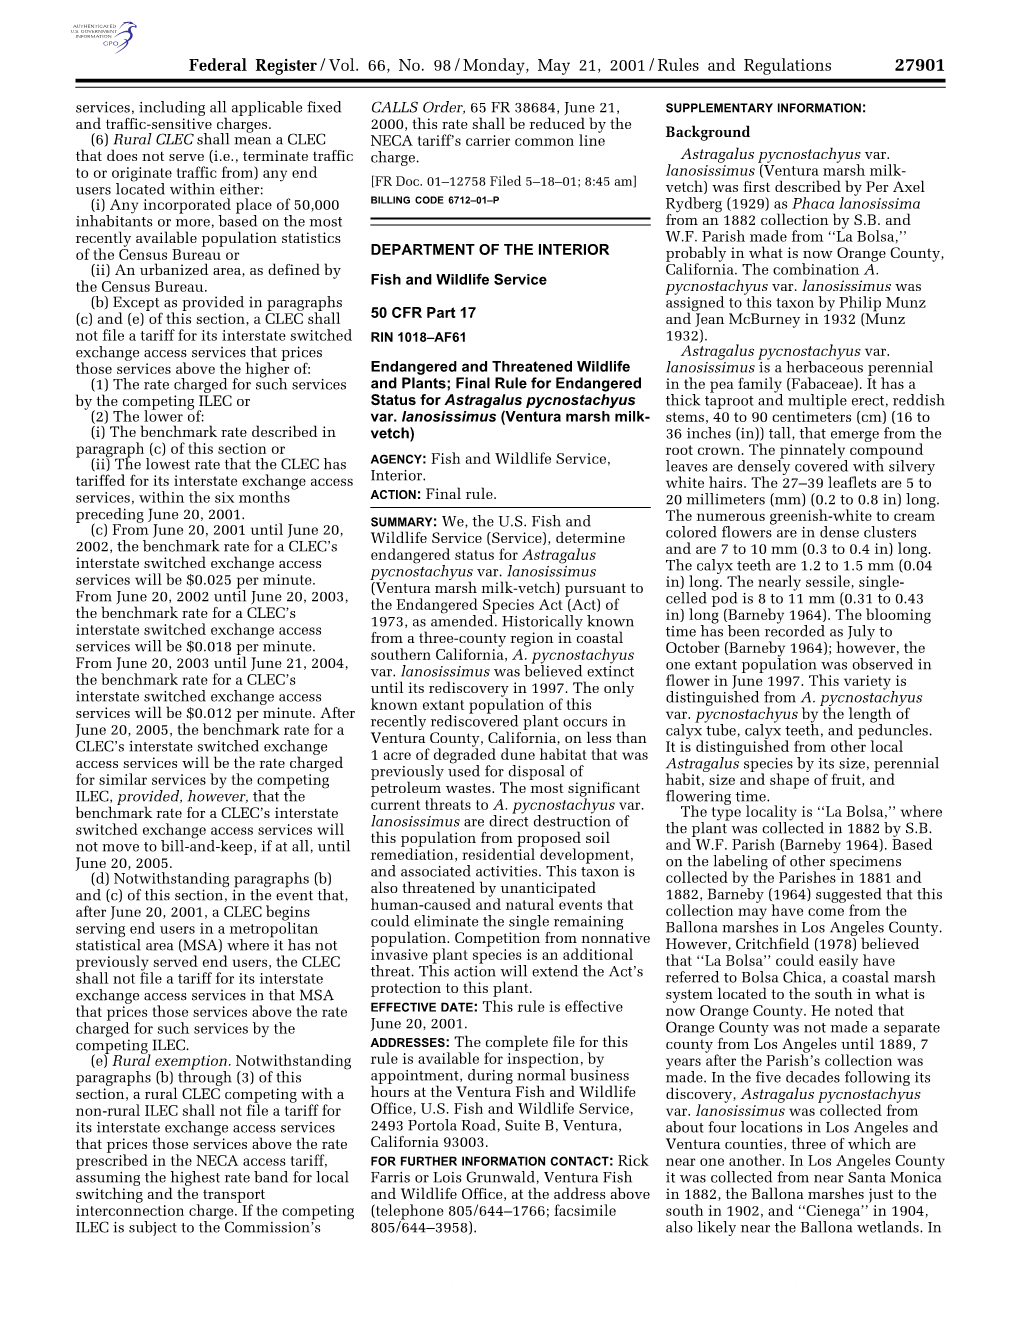 Final Rule for Endangered Status for Astragalus Pycnostachyus Var